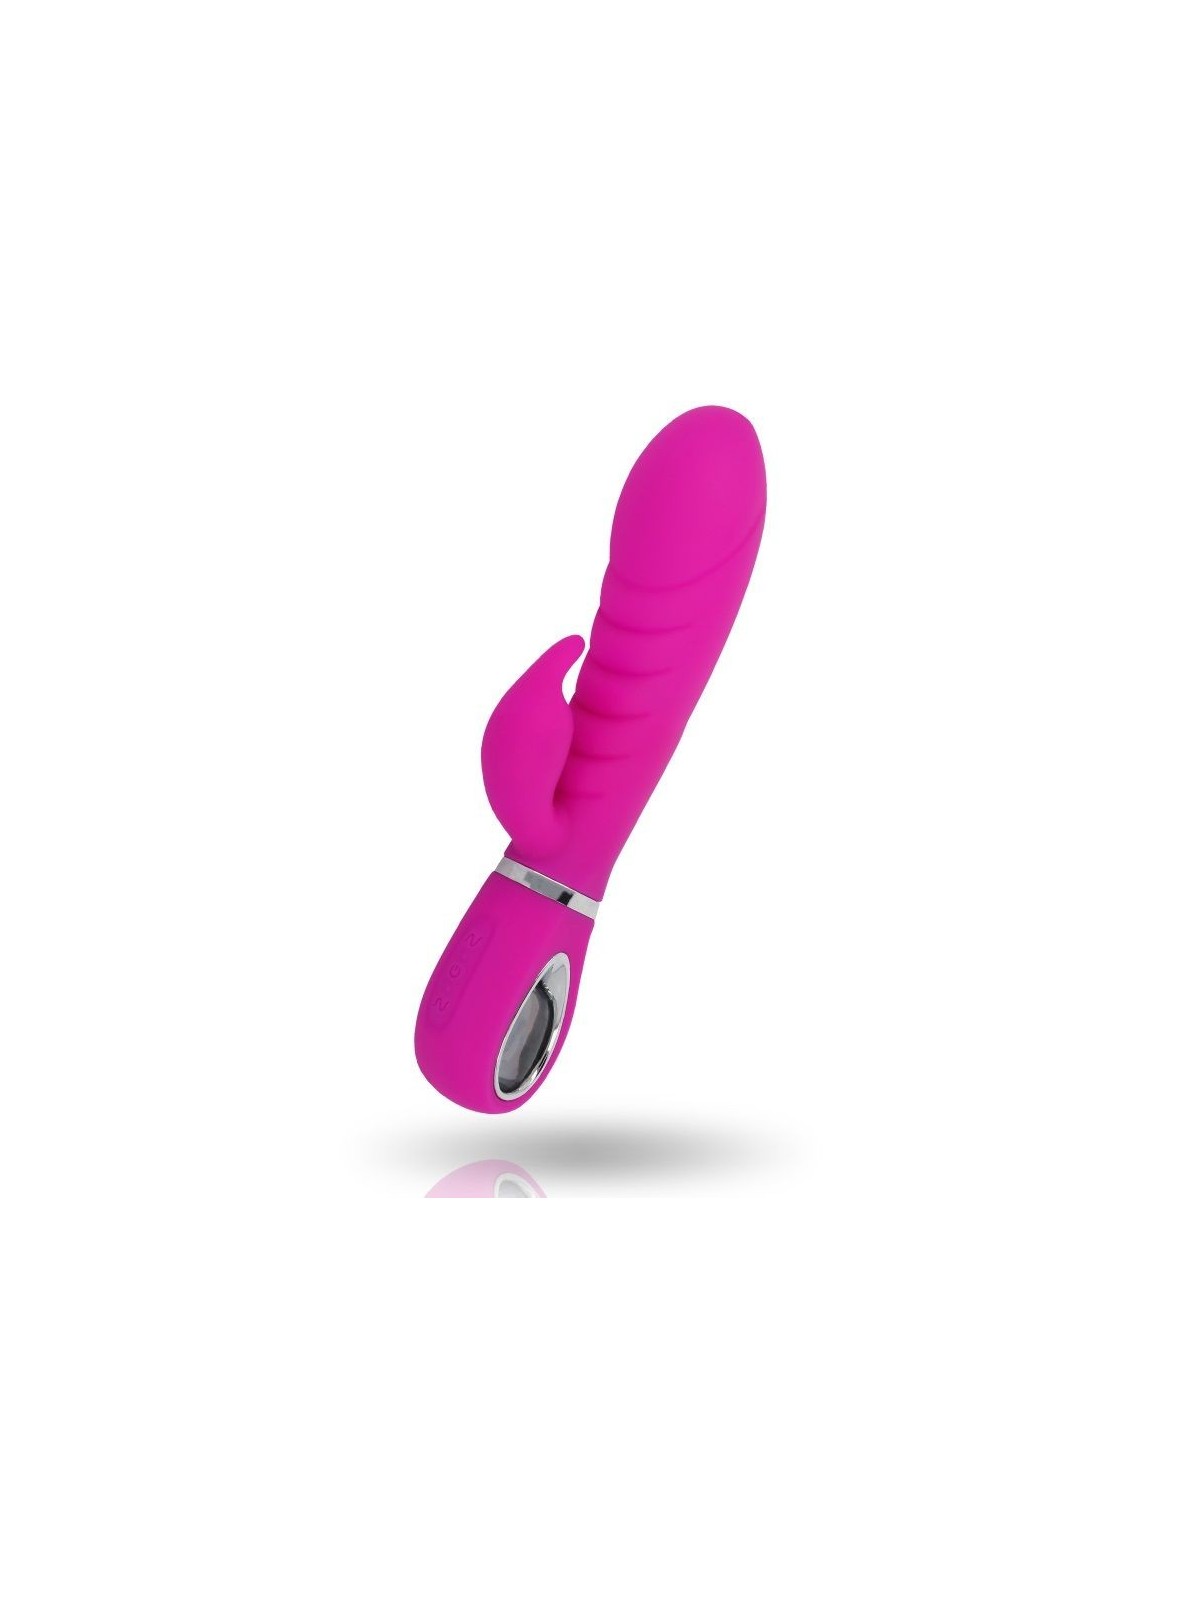 Inspire Soft Ariella Vibrador Rosa - Comprar Conejito vibrador Inspire - Conejito rampante (1)